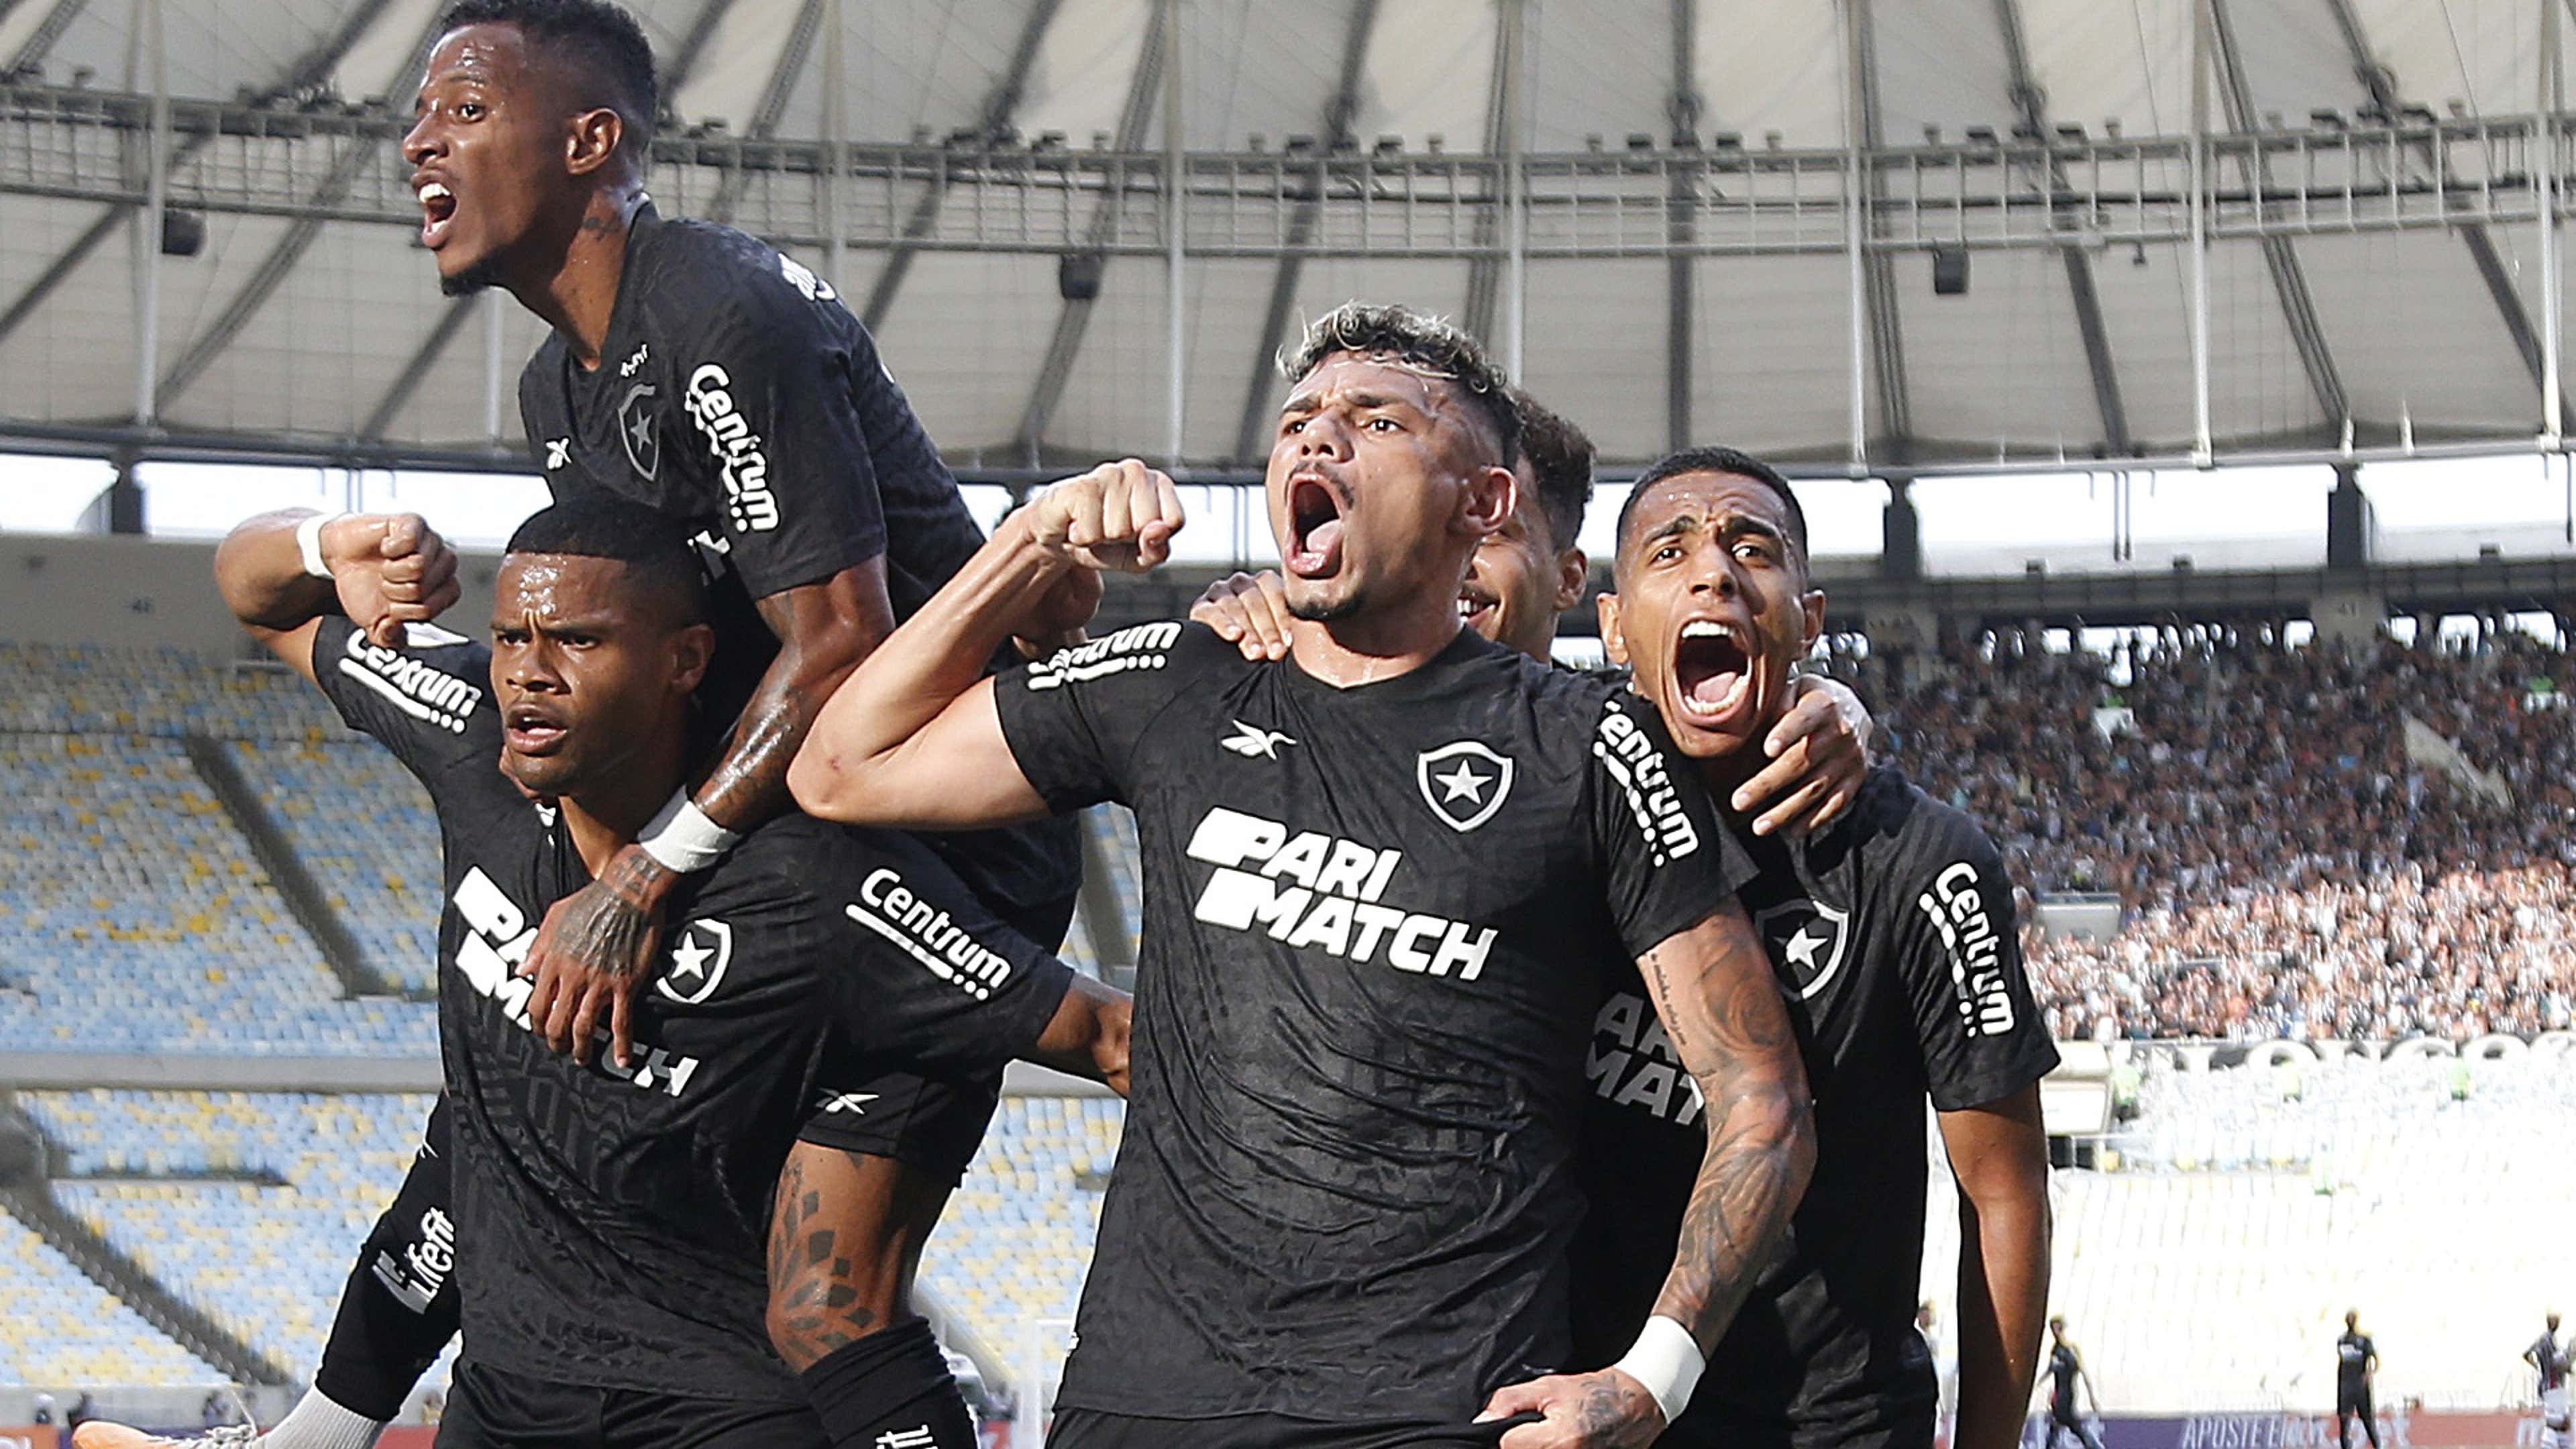 Grêmio vs Ypiranga: A Battle of Tradition vs Determination